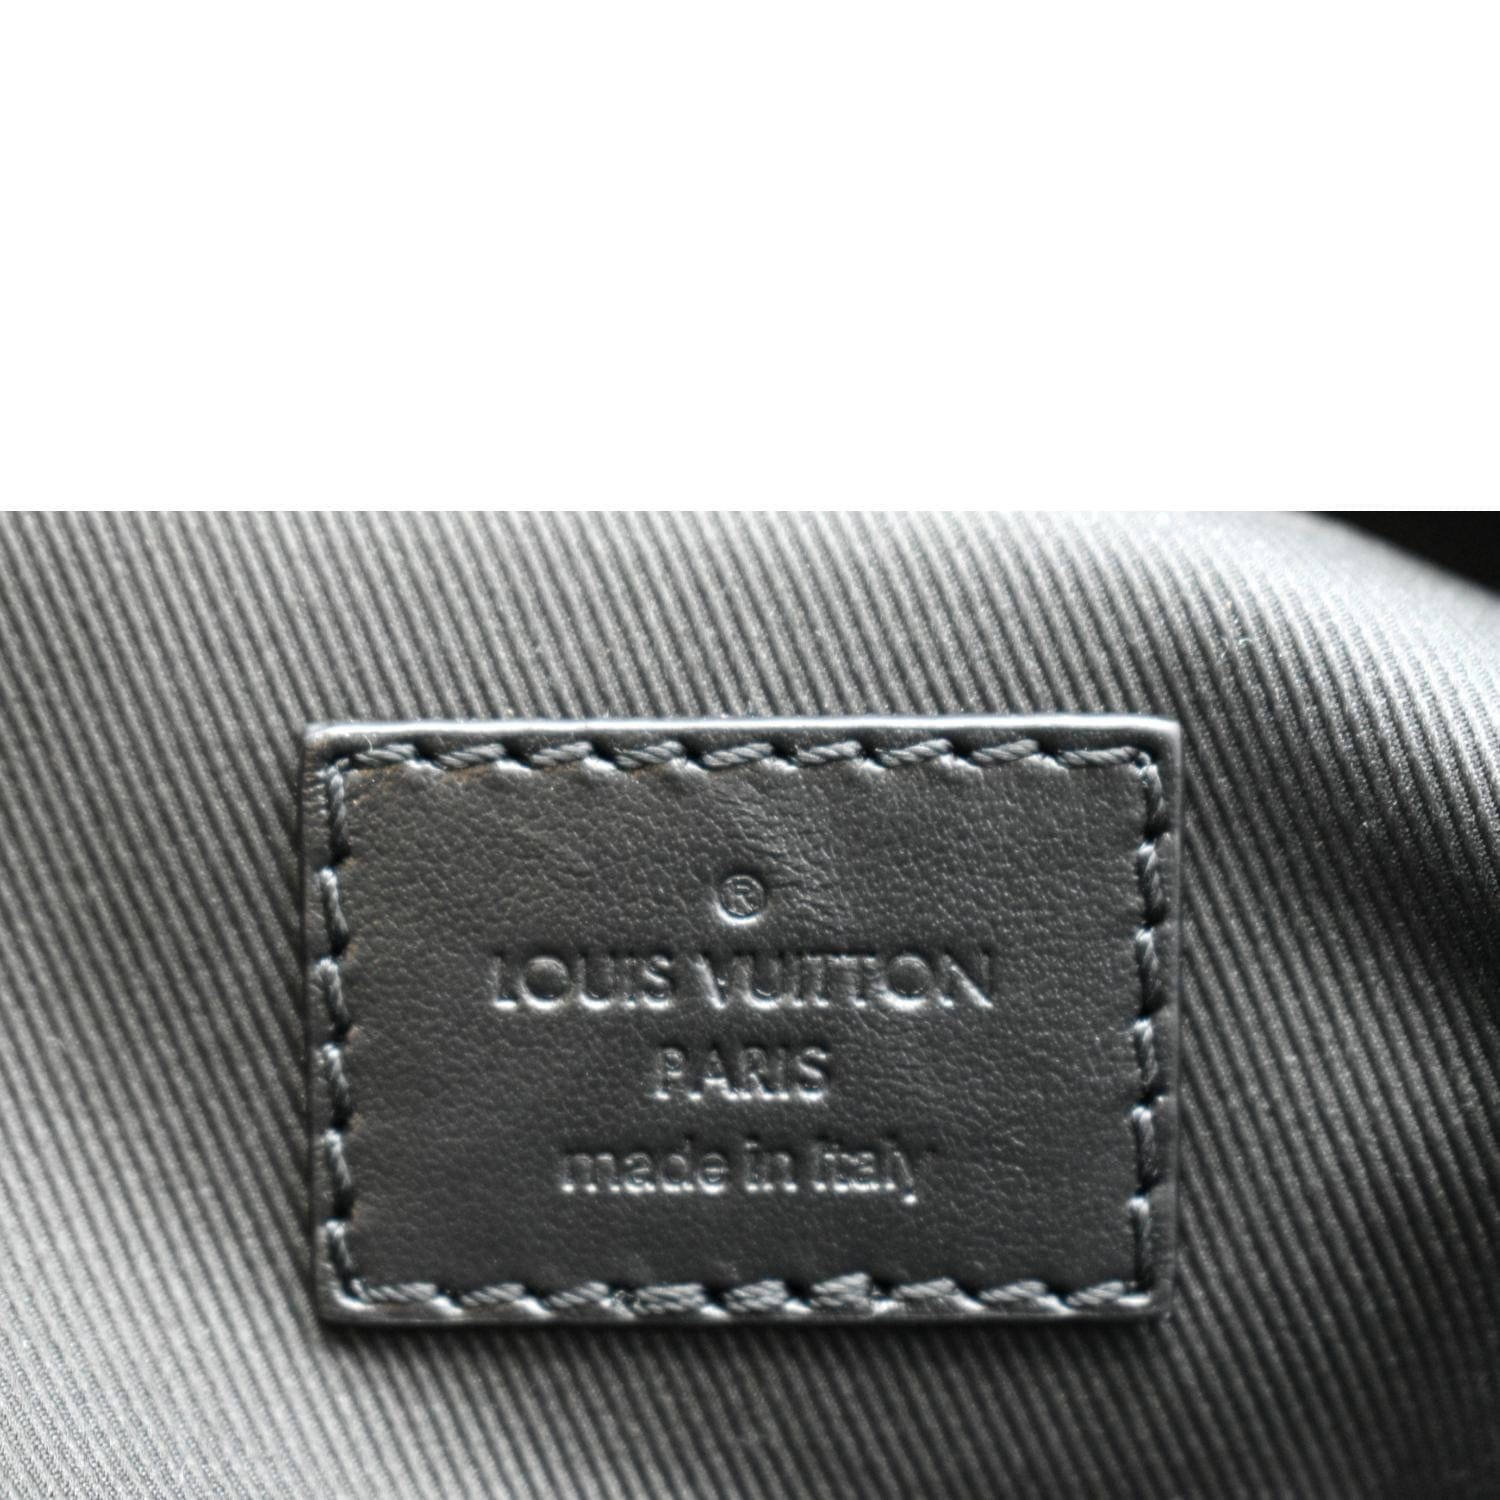 Louis Vuitton Monogram Macassar & Blue Leather Dean Backpack